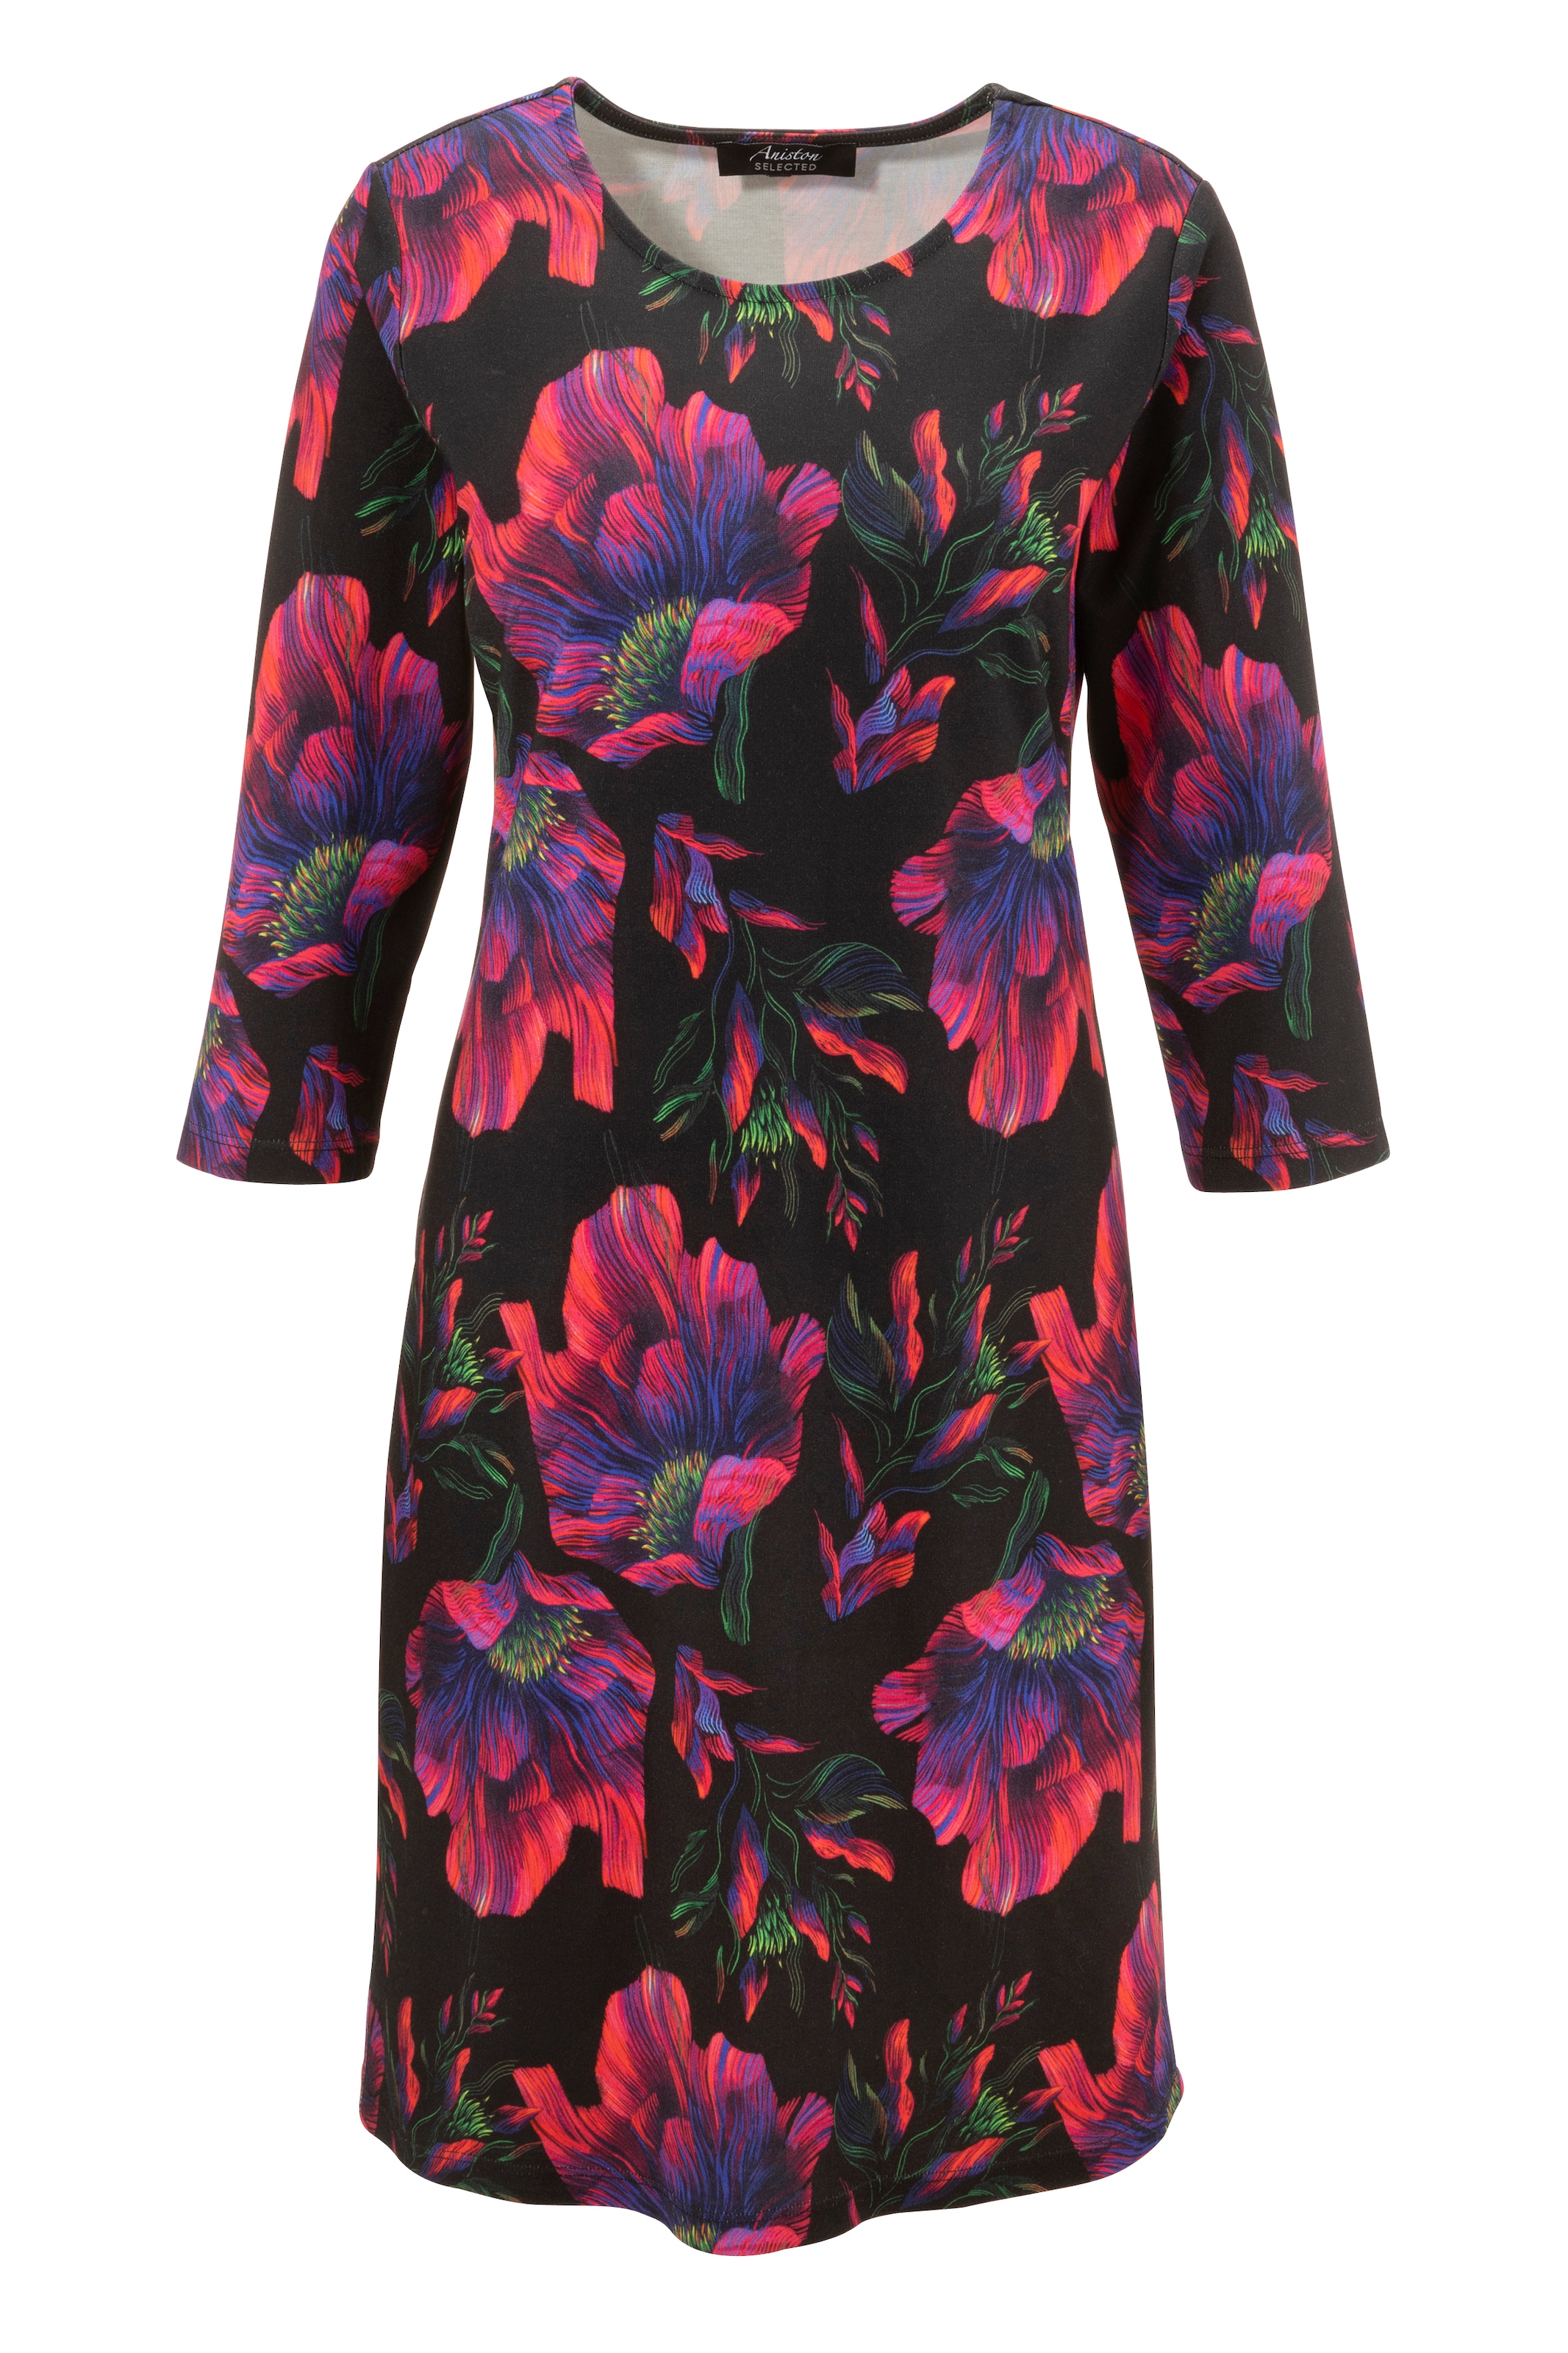 Aniston SELECTED kaufen mit Knallfarben in Jerseykleid, Blumendruck